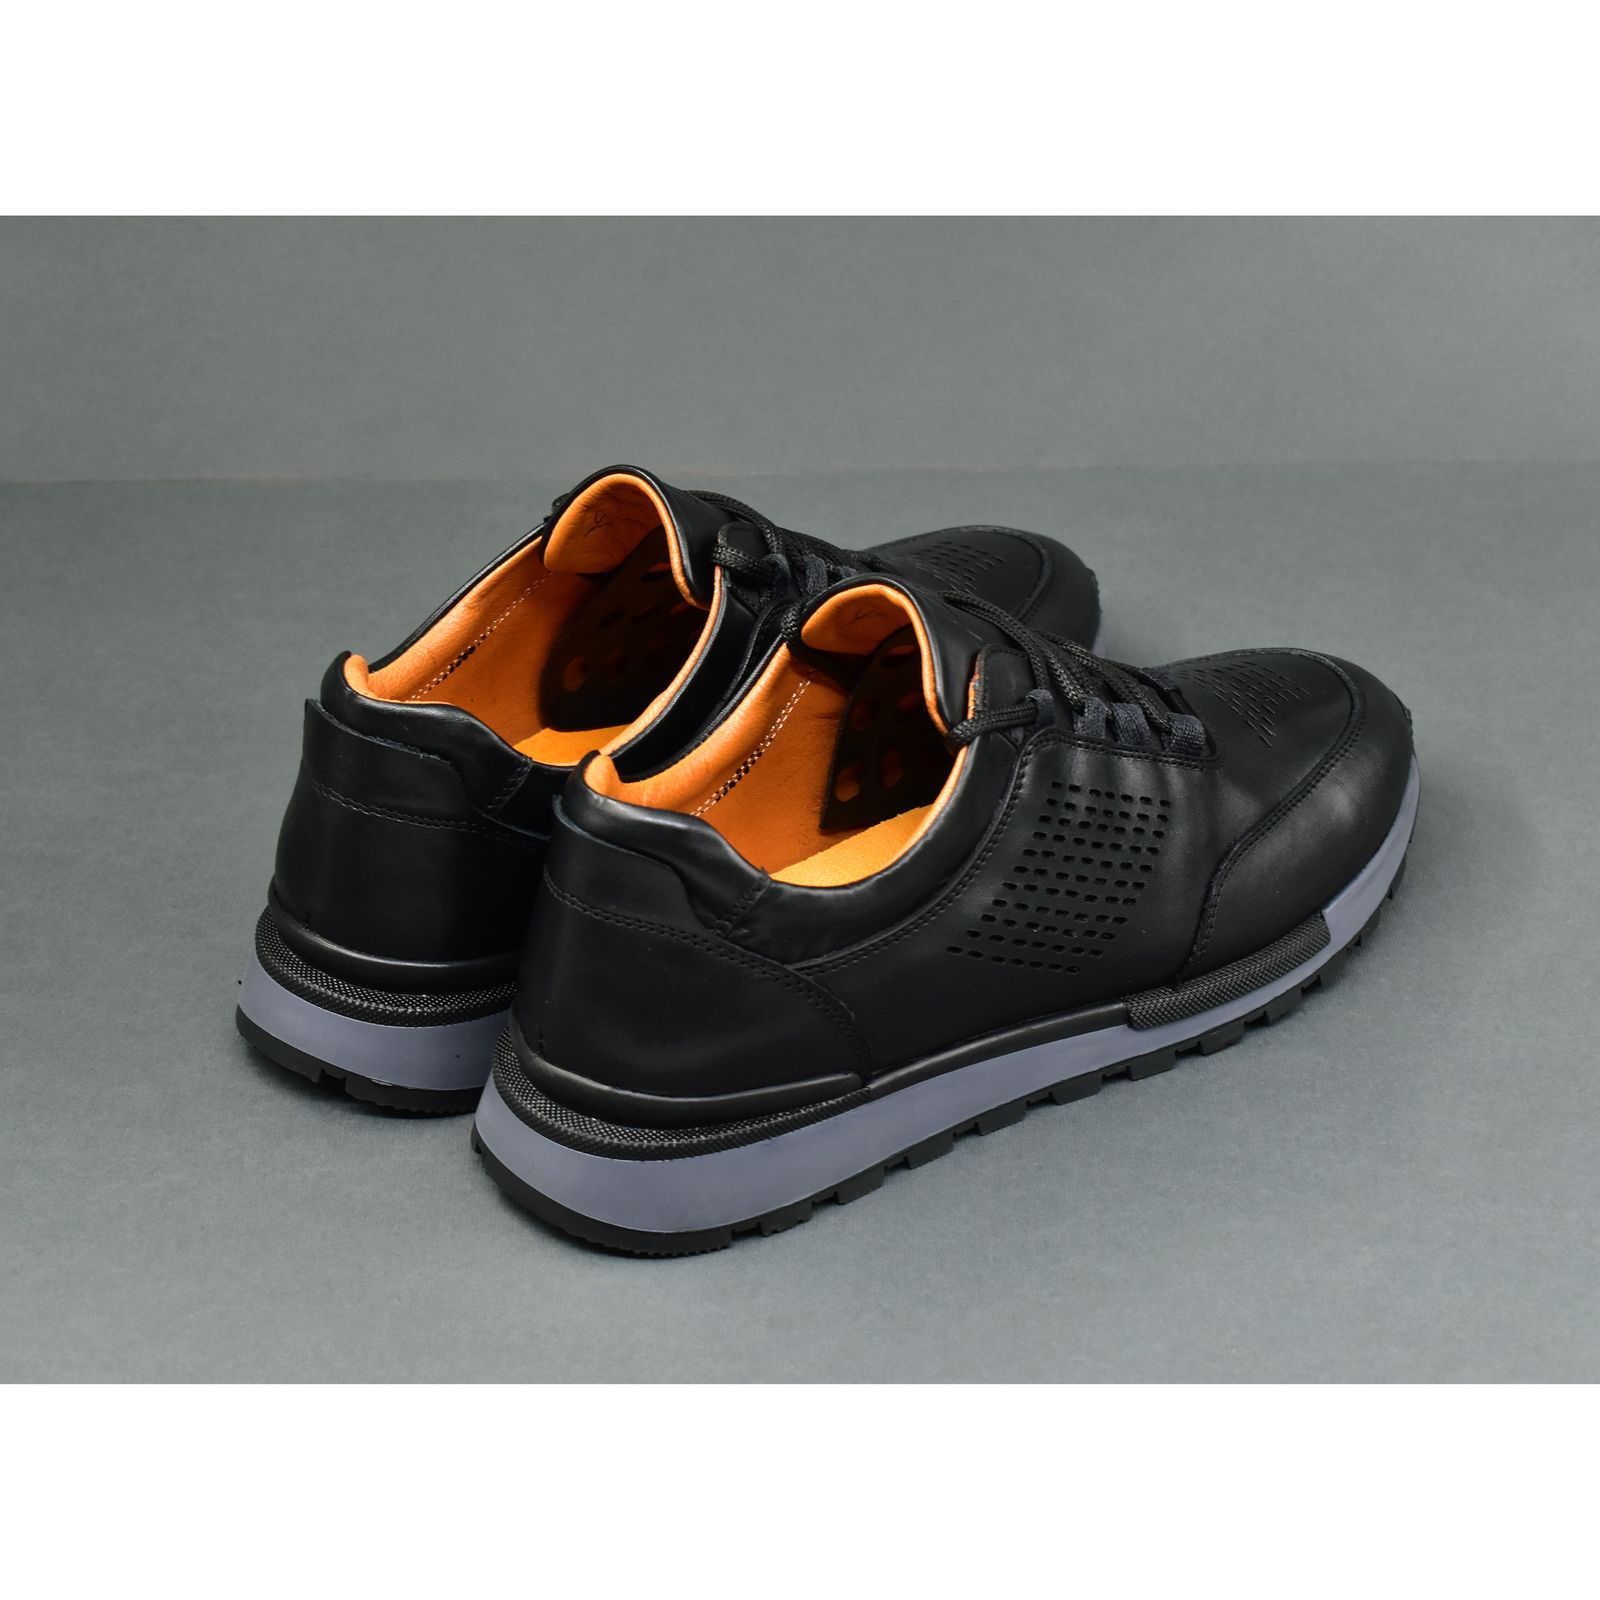 کفش روزمره مردانه پاما مدل ME-644 کد G1804 -  - 4